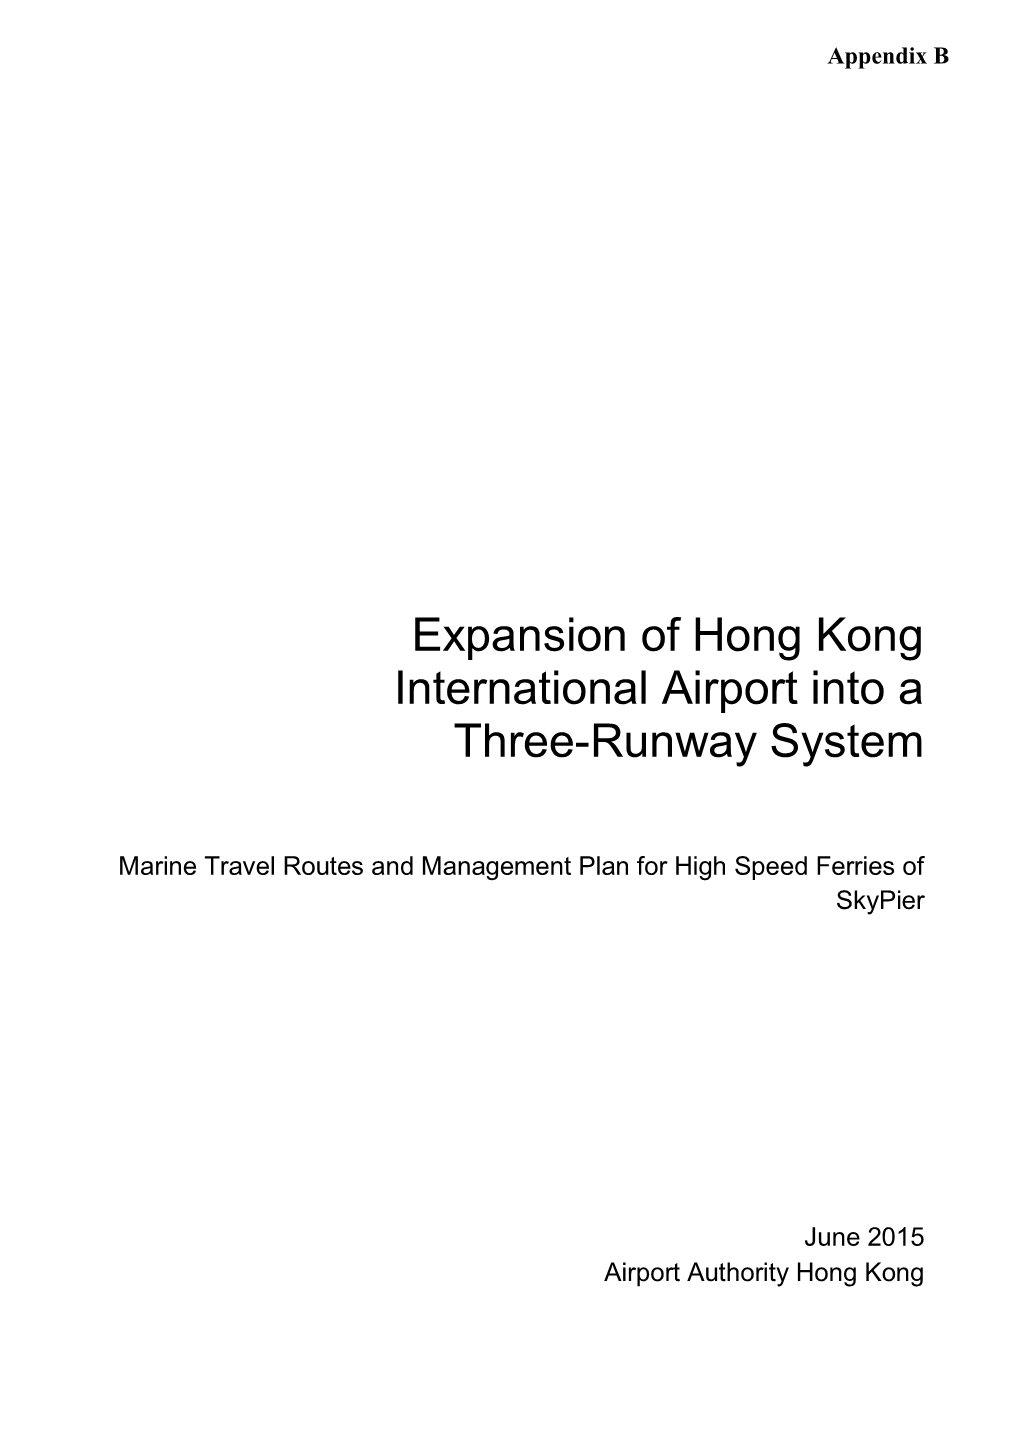 Expansion of Hong Kong International Airport Into a Three-Runway System